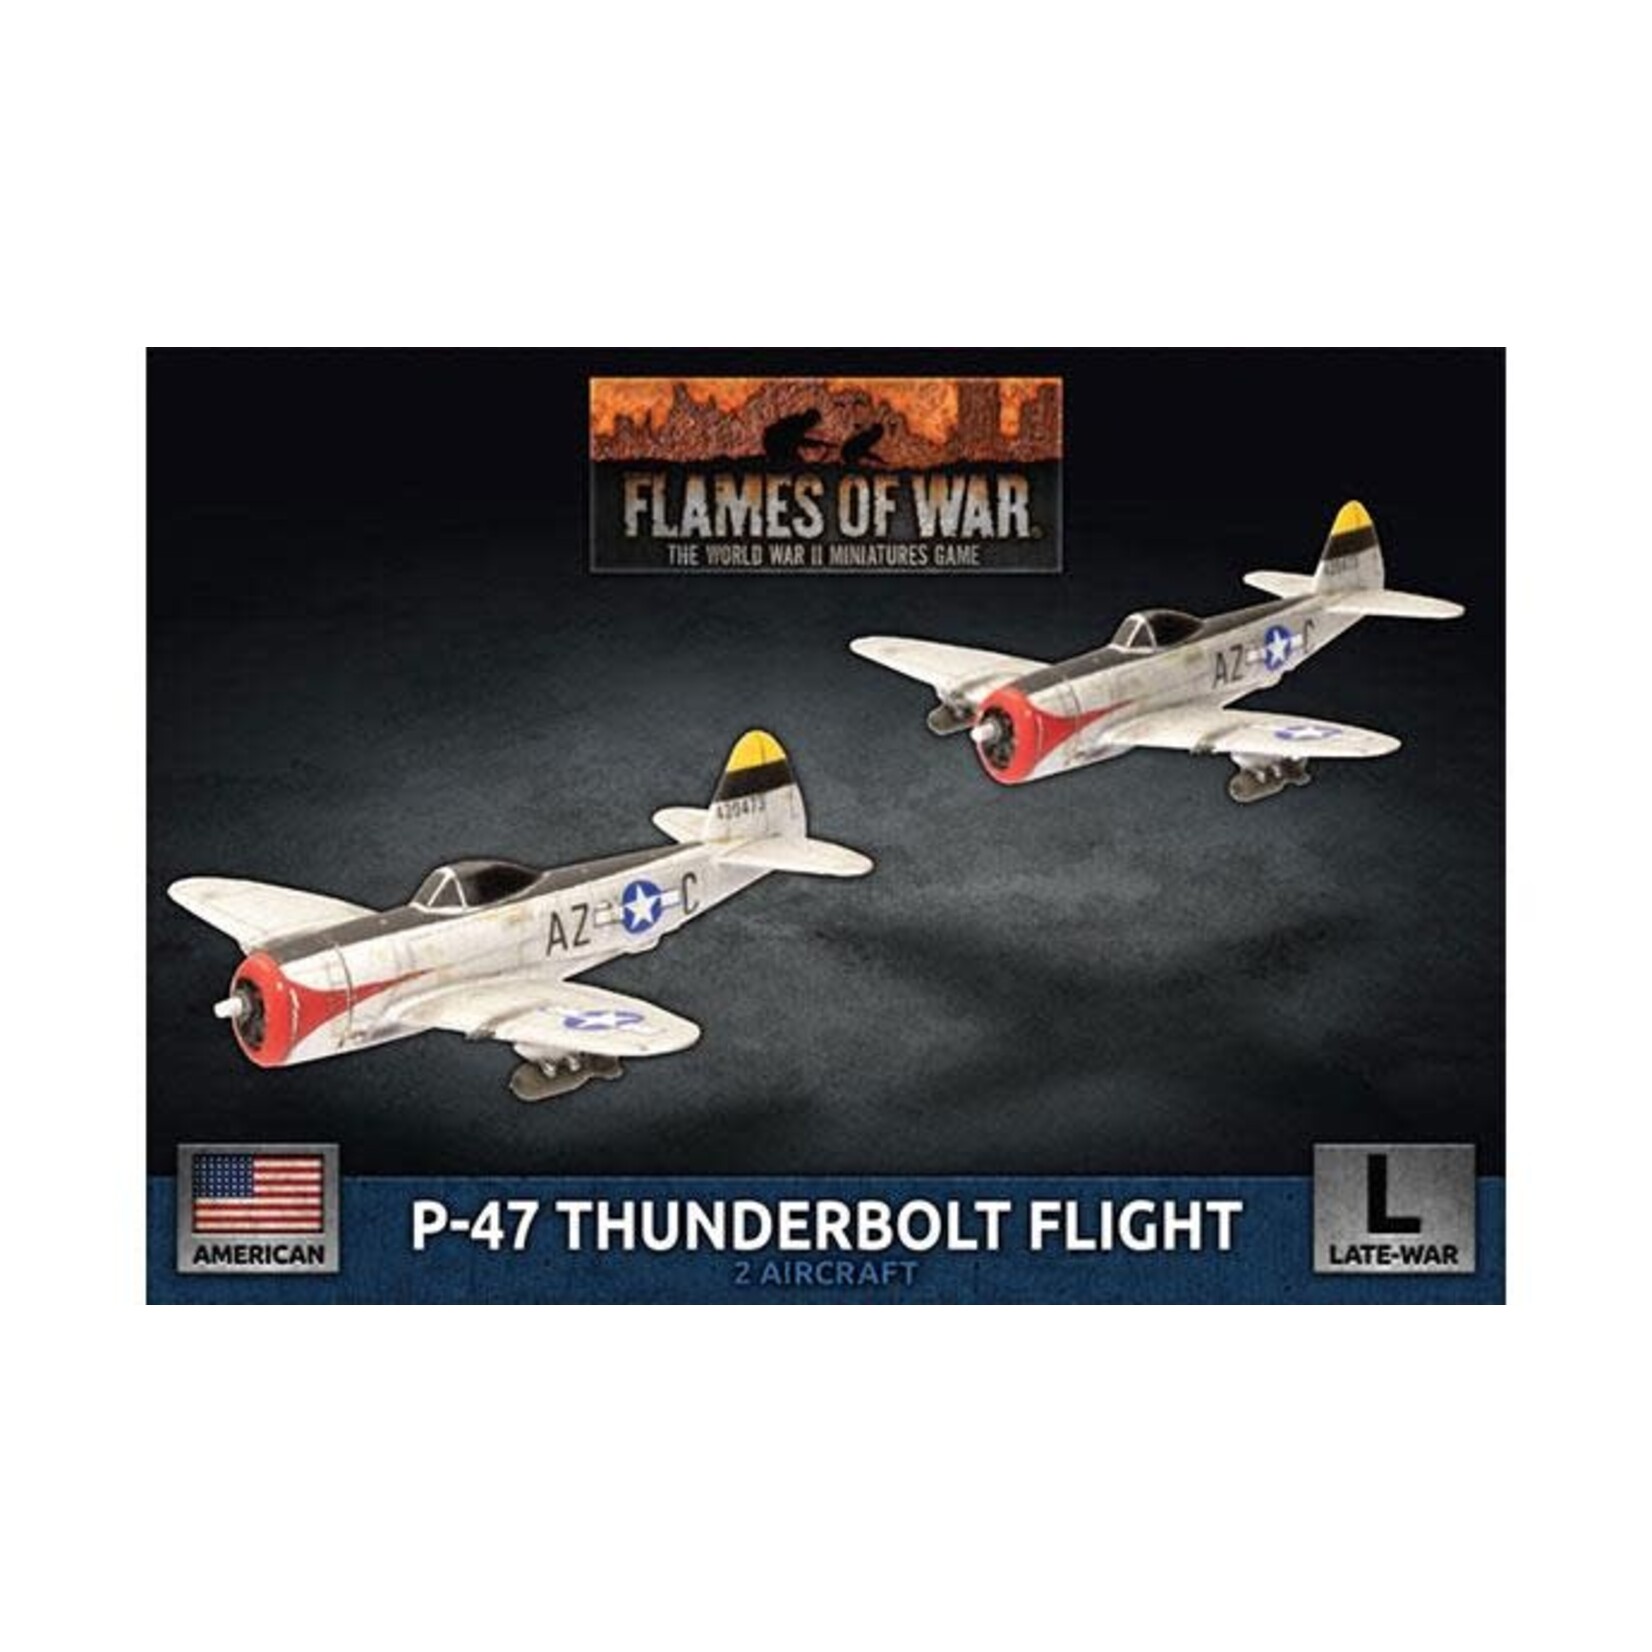 Flames of War Flames of War: American: P-47 Thunderbolt Fighter Flight